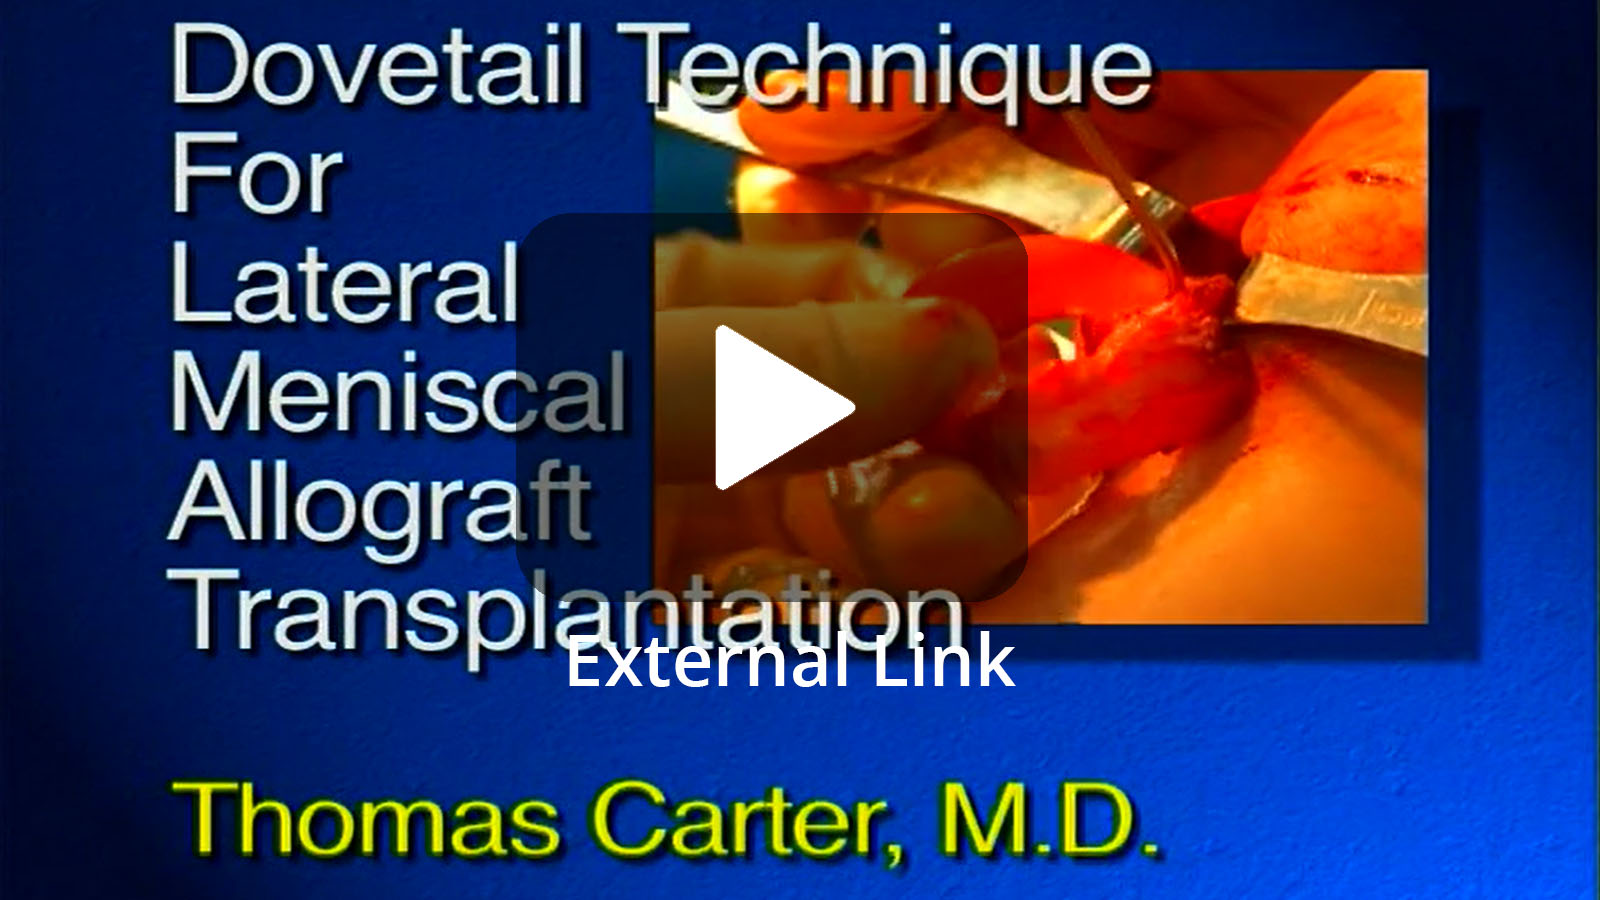 Dovetail Technique for Lateral Meniscal Allograft Transplantation (External Link)